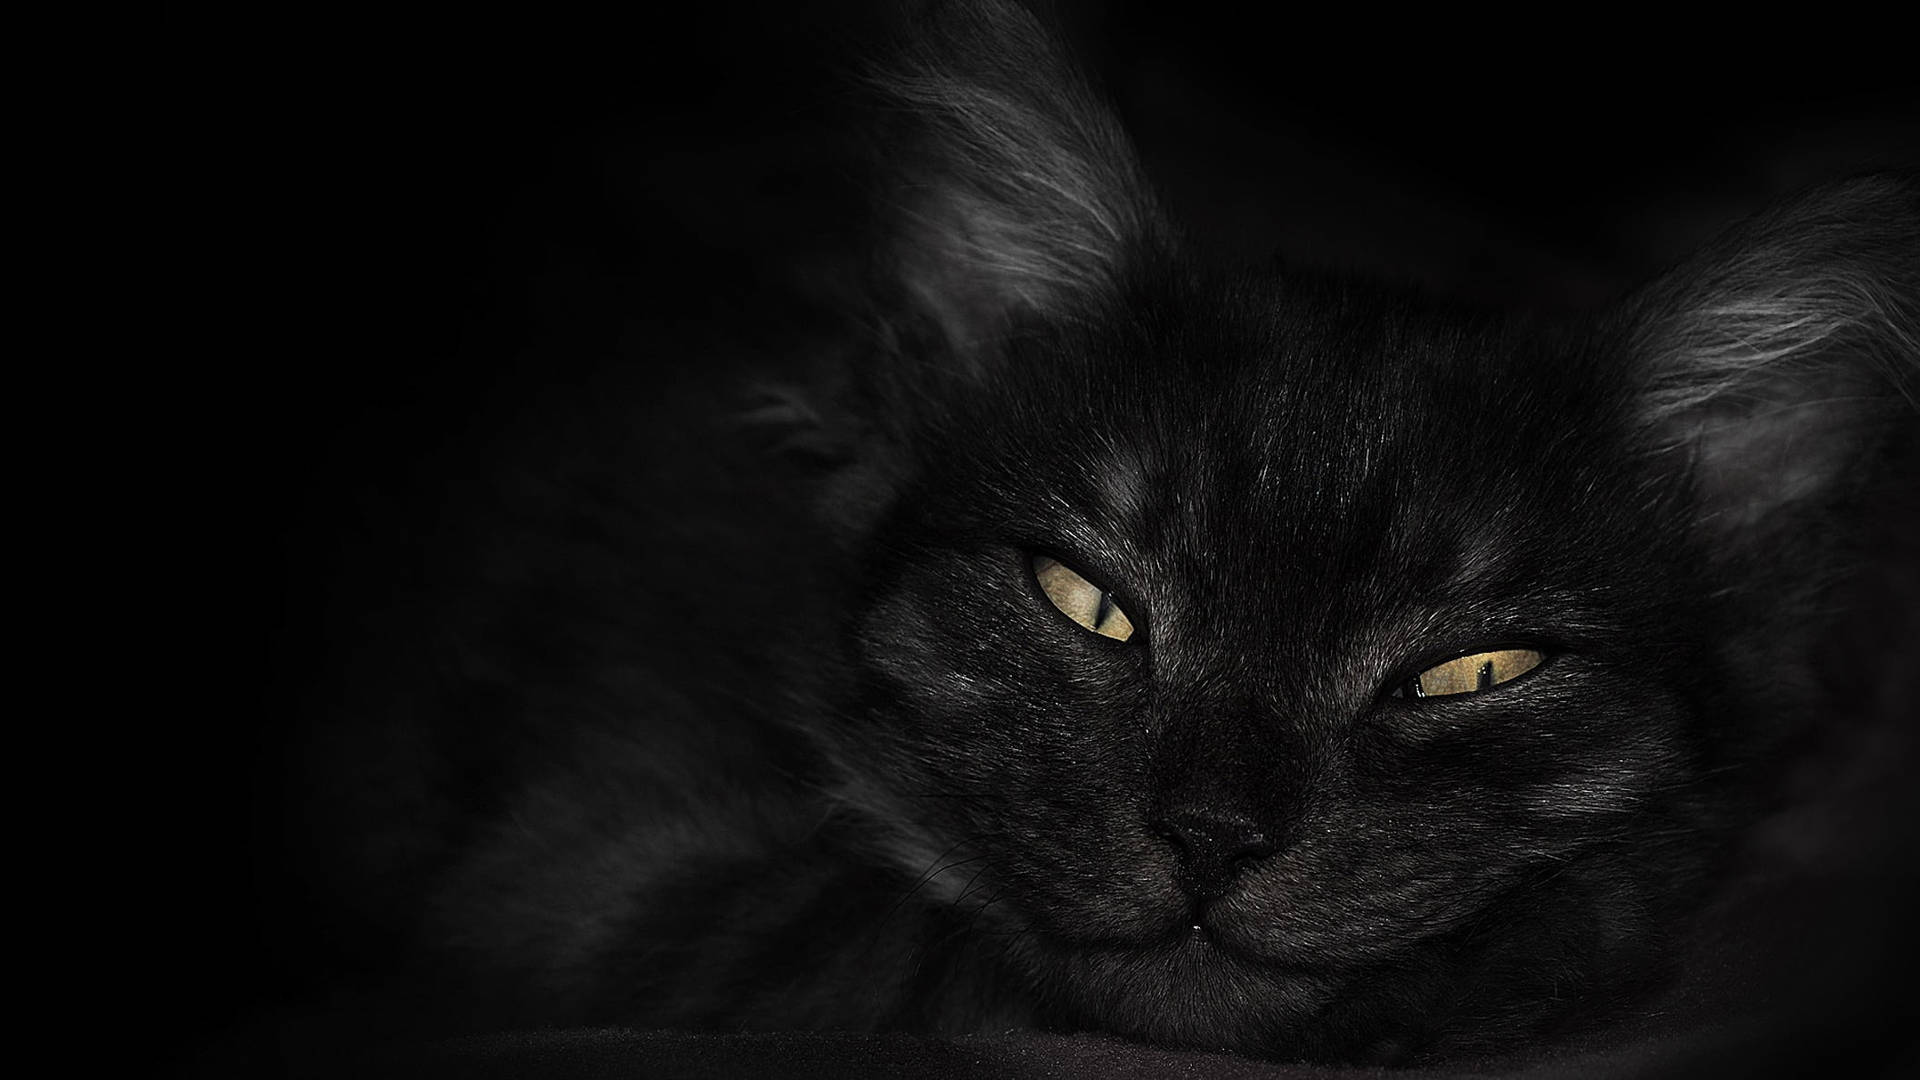 Dark Laptop Black Cat With Yellow Eyes